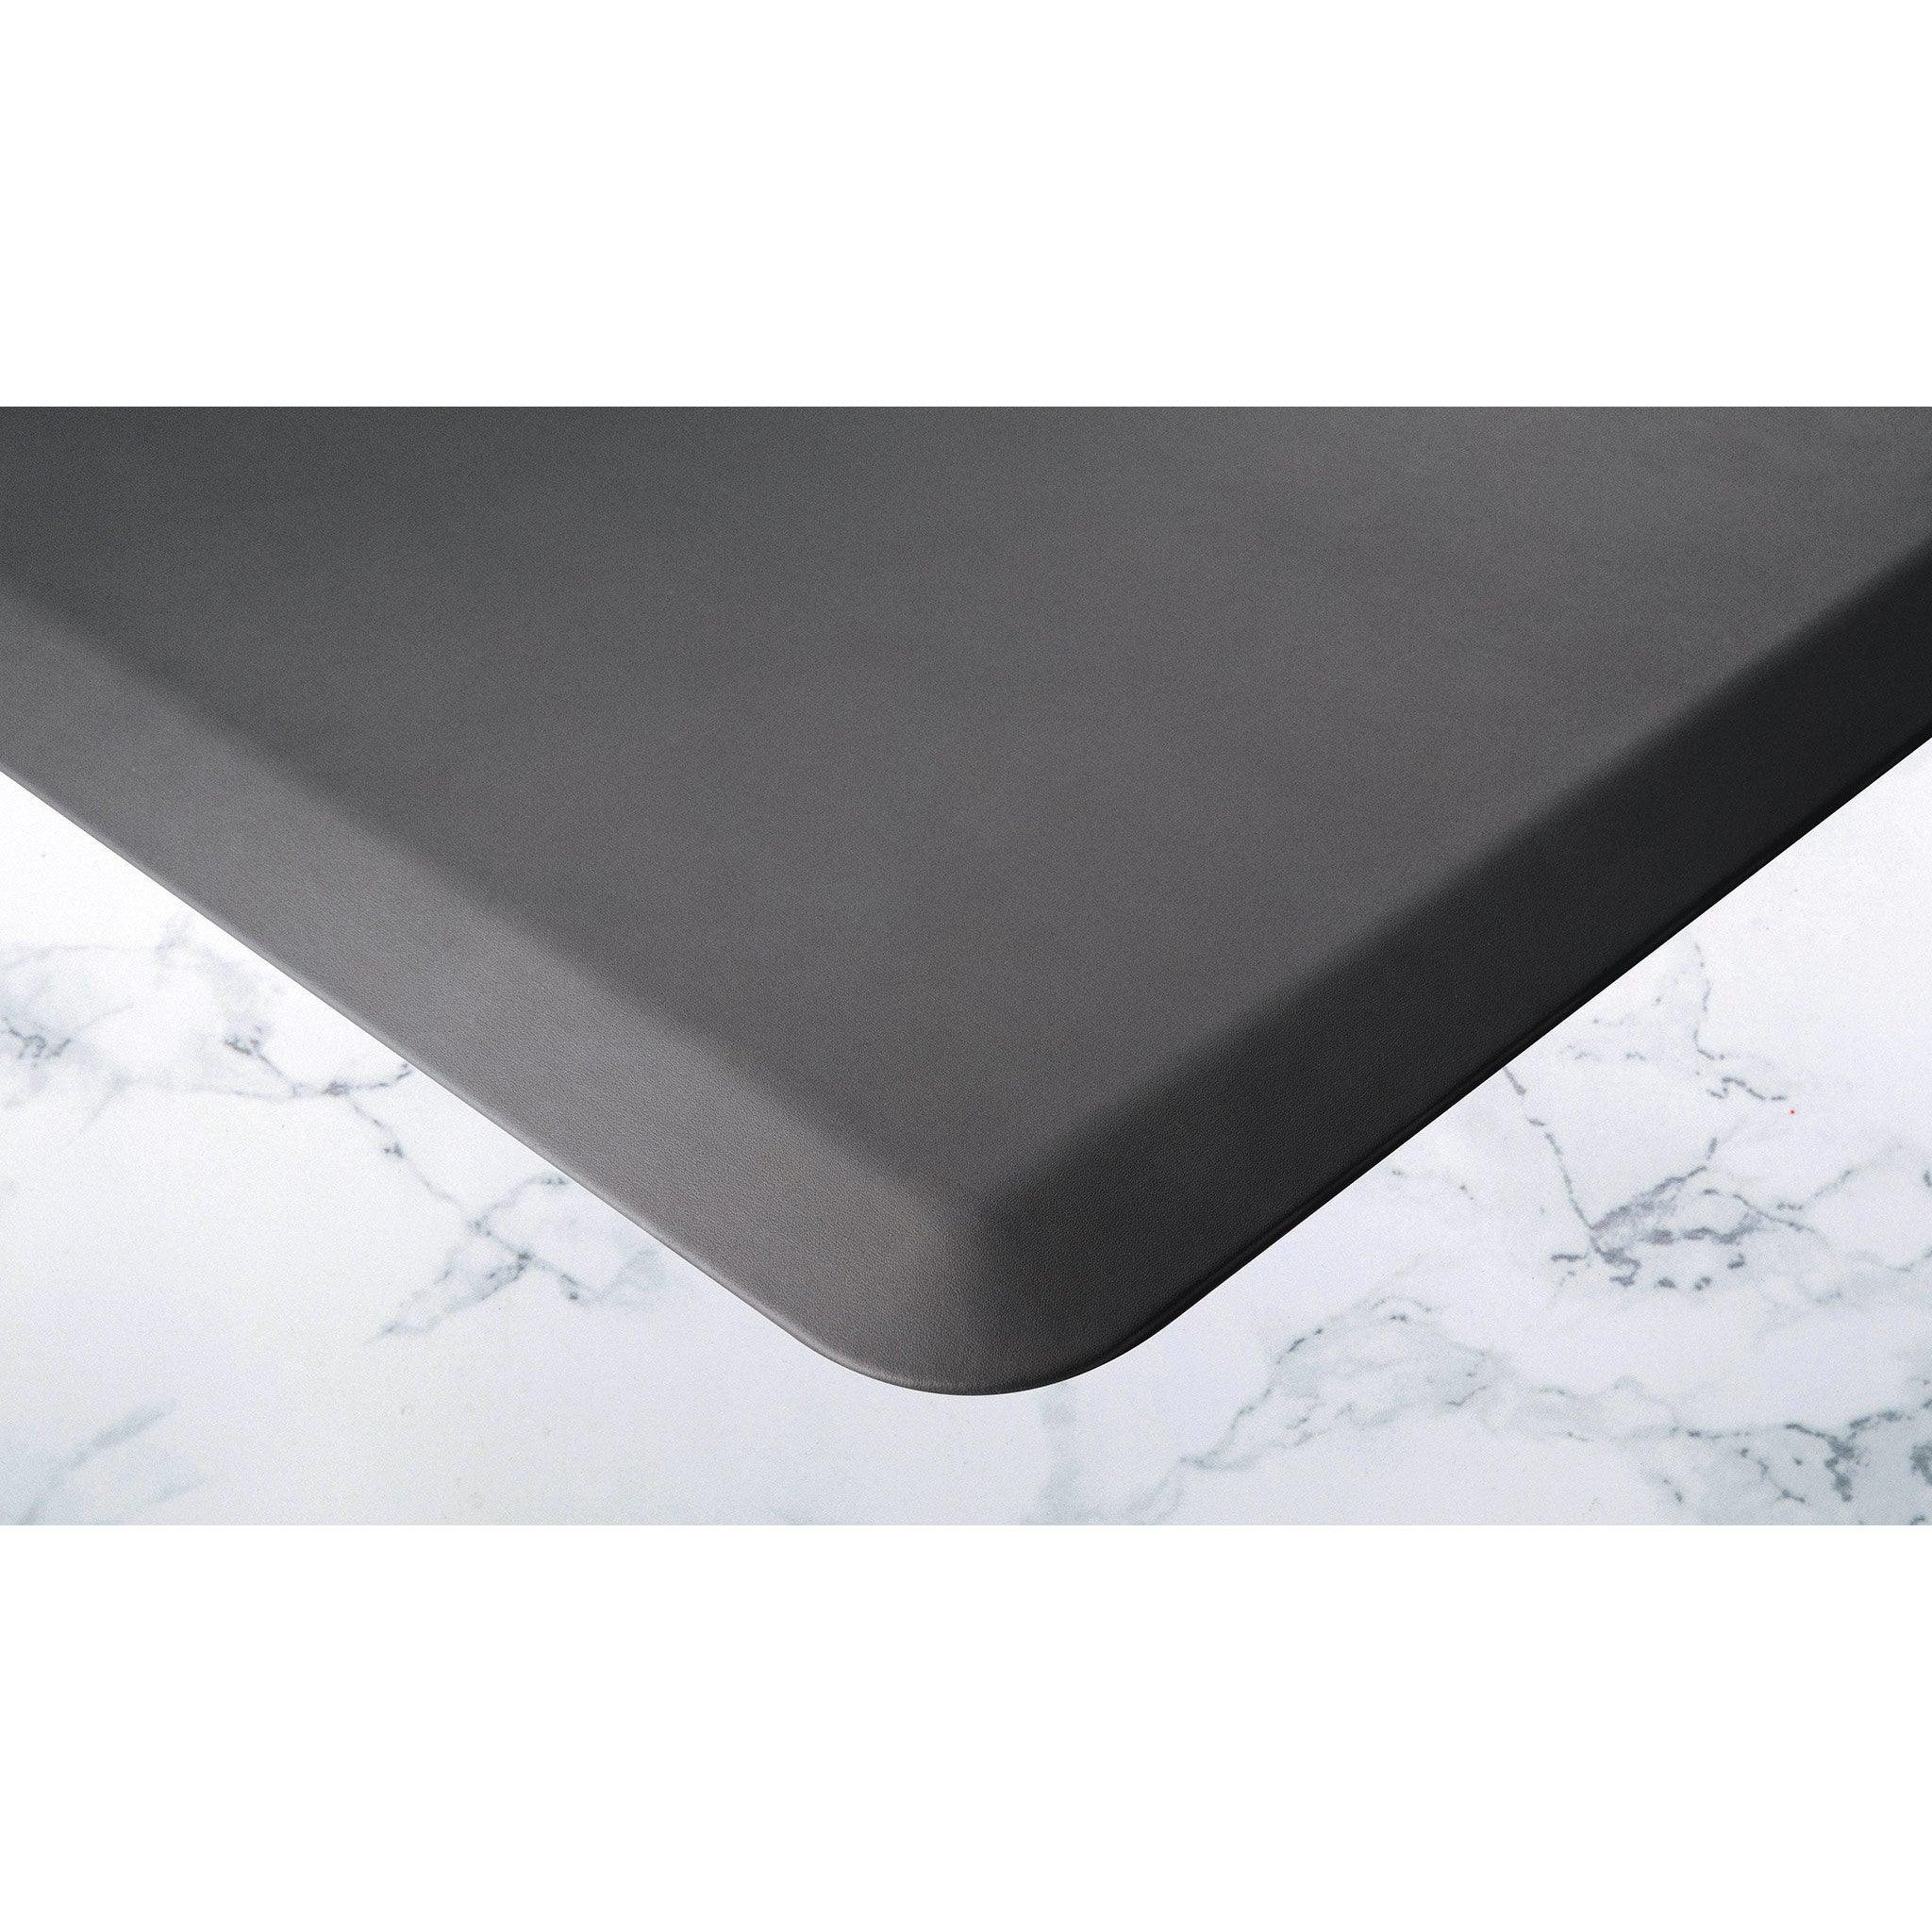 Bevel detail of gray EcoLast Premium Standing Mat